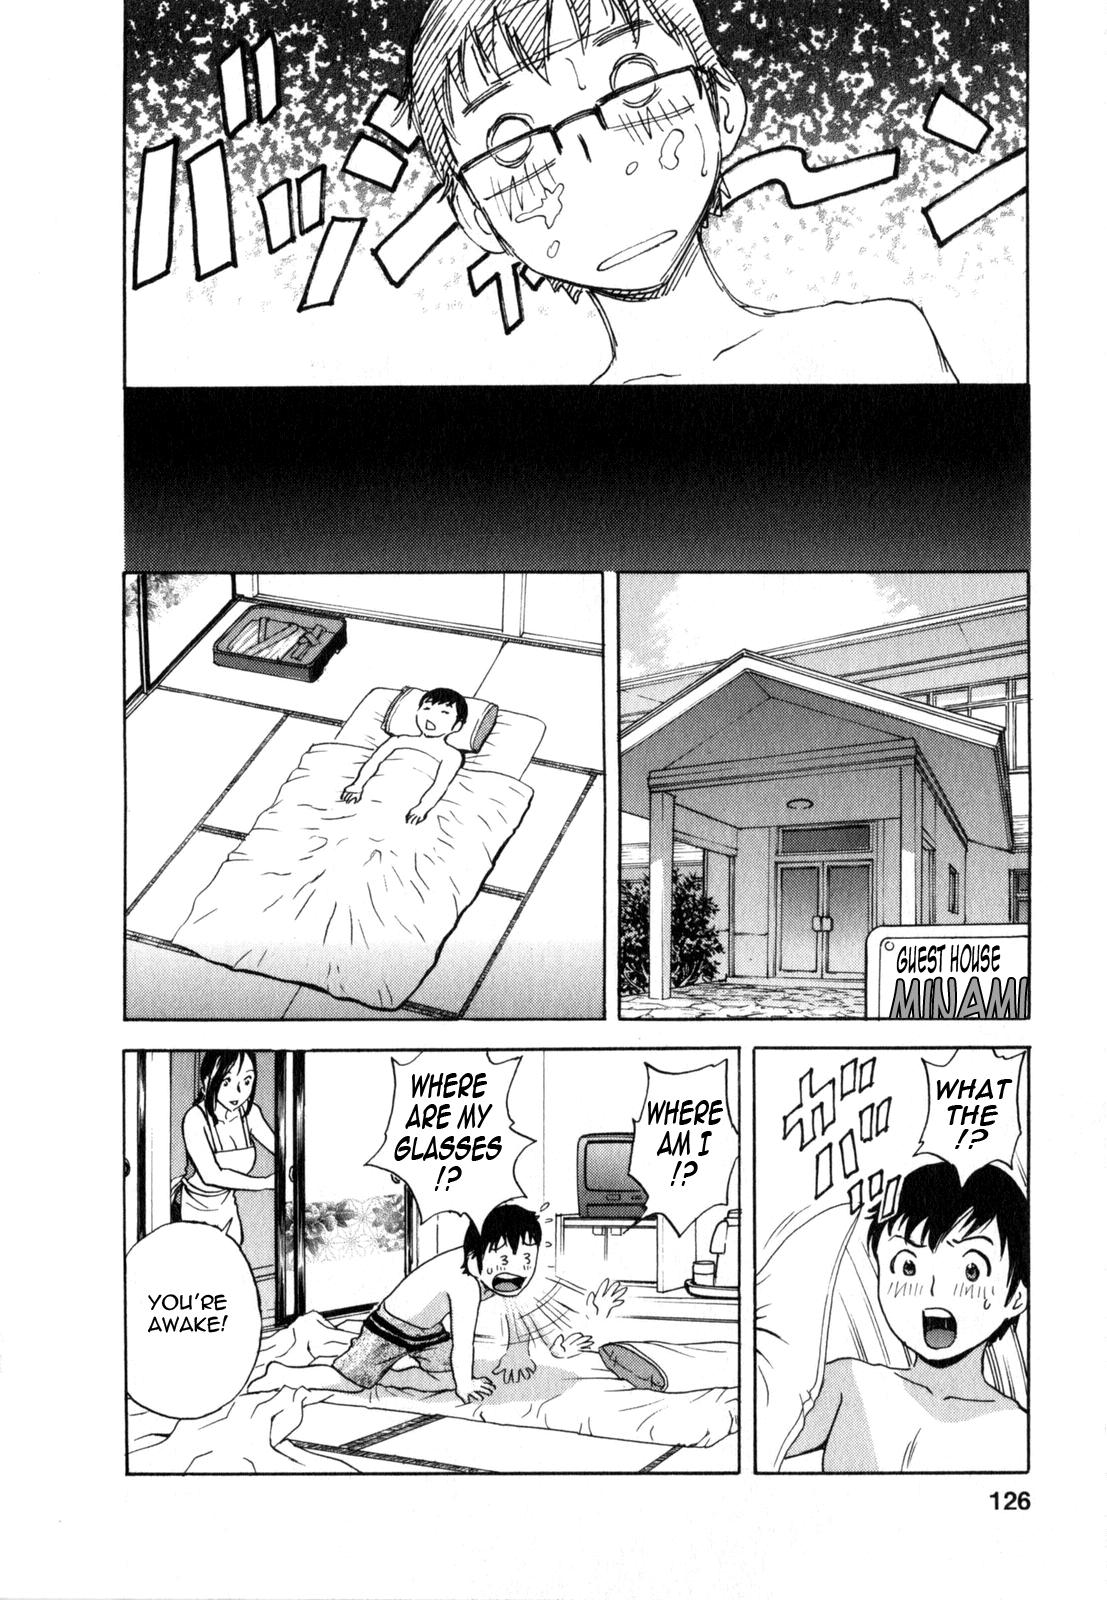 [Hidemaru] Life with Married Women Just Like a Manga 2 - Ch. 1-7 [English] {Tadanohito} 131